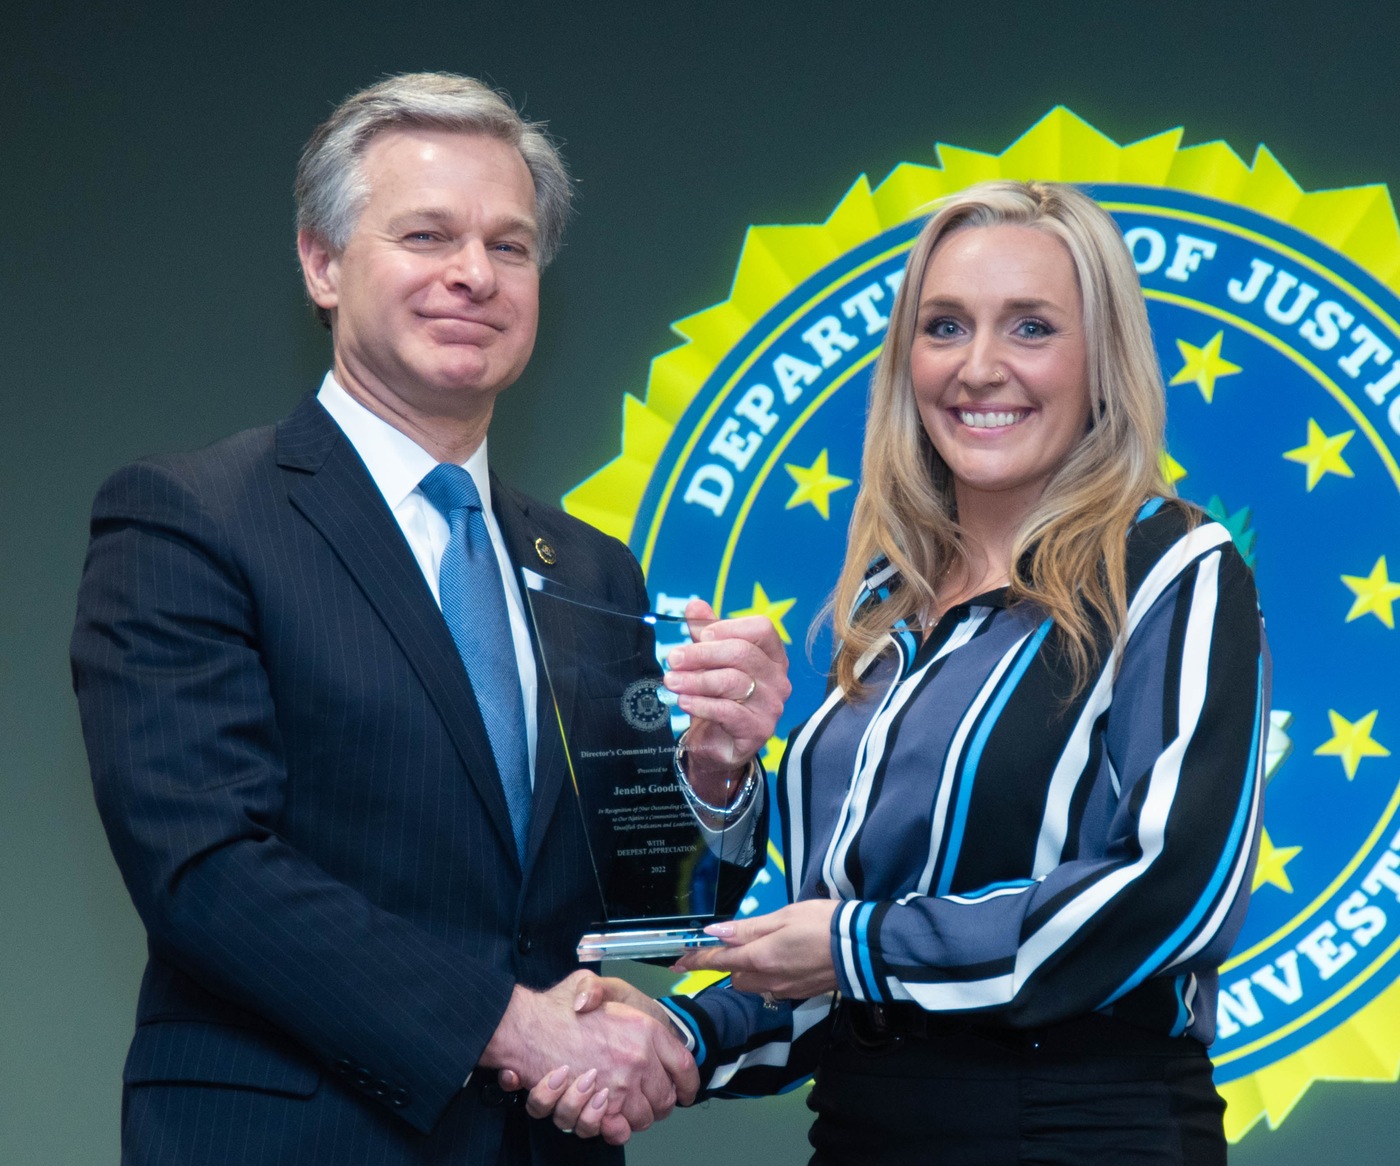 FBI Denver 2022 Director’s Community Leadership Award recipient Jenelle Goodrich.